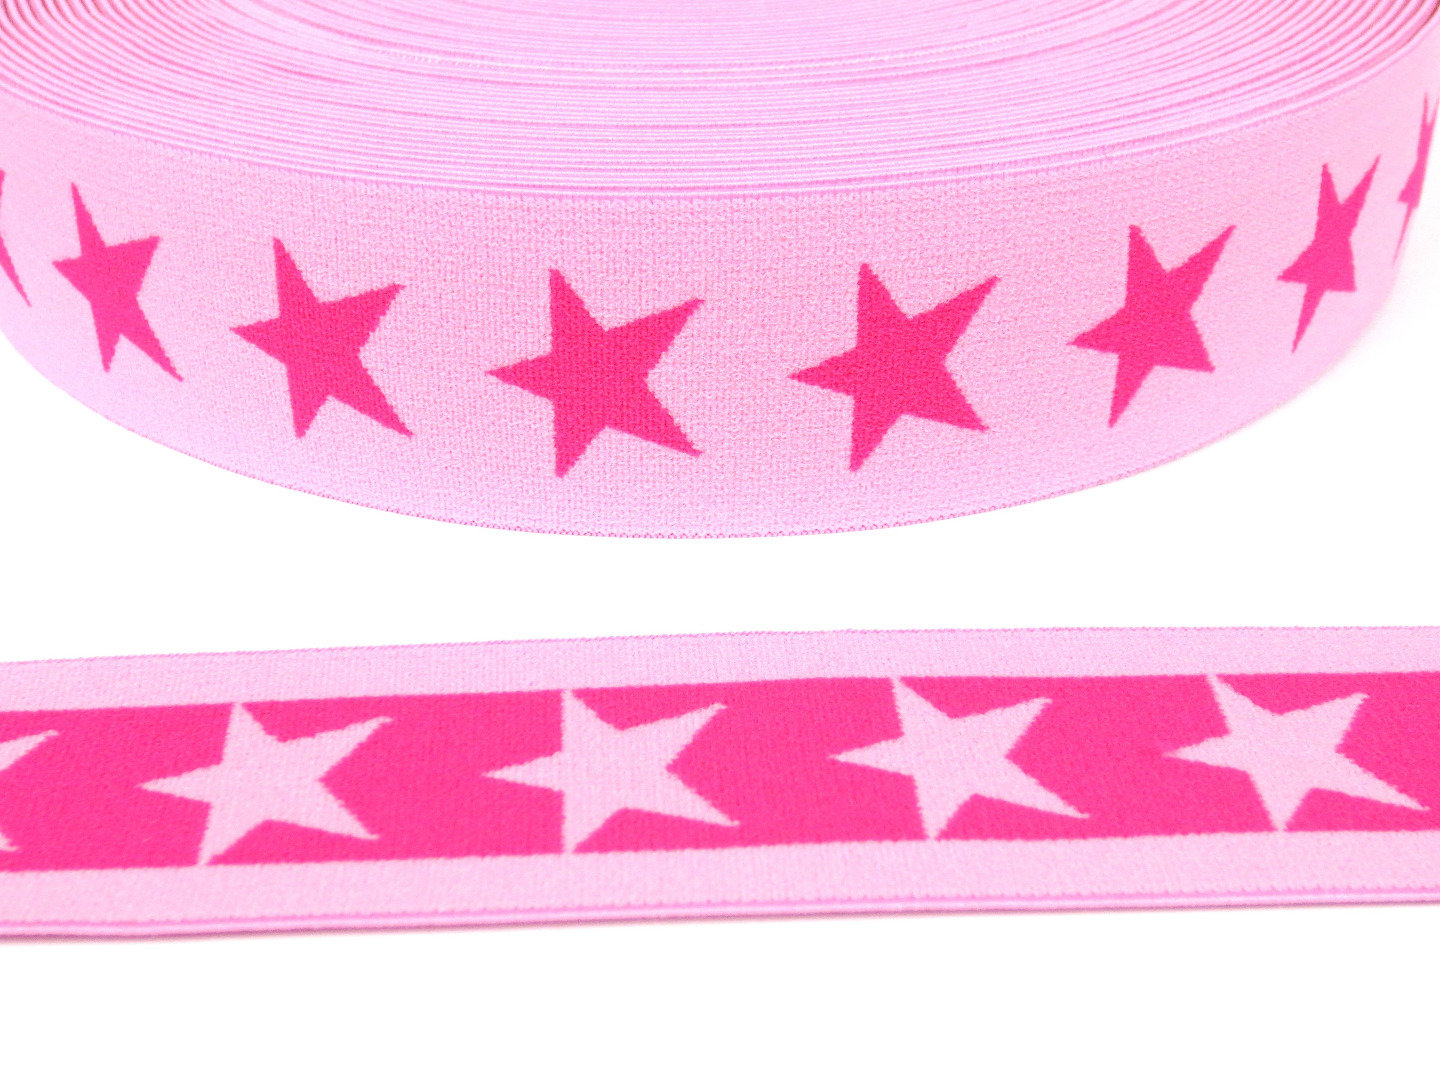 Gummiband Sterne - rosa-dunkelpink - 4 cm Breit